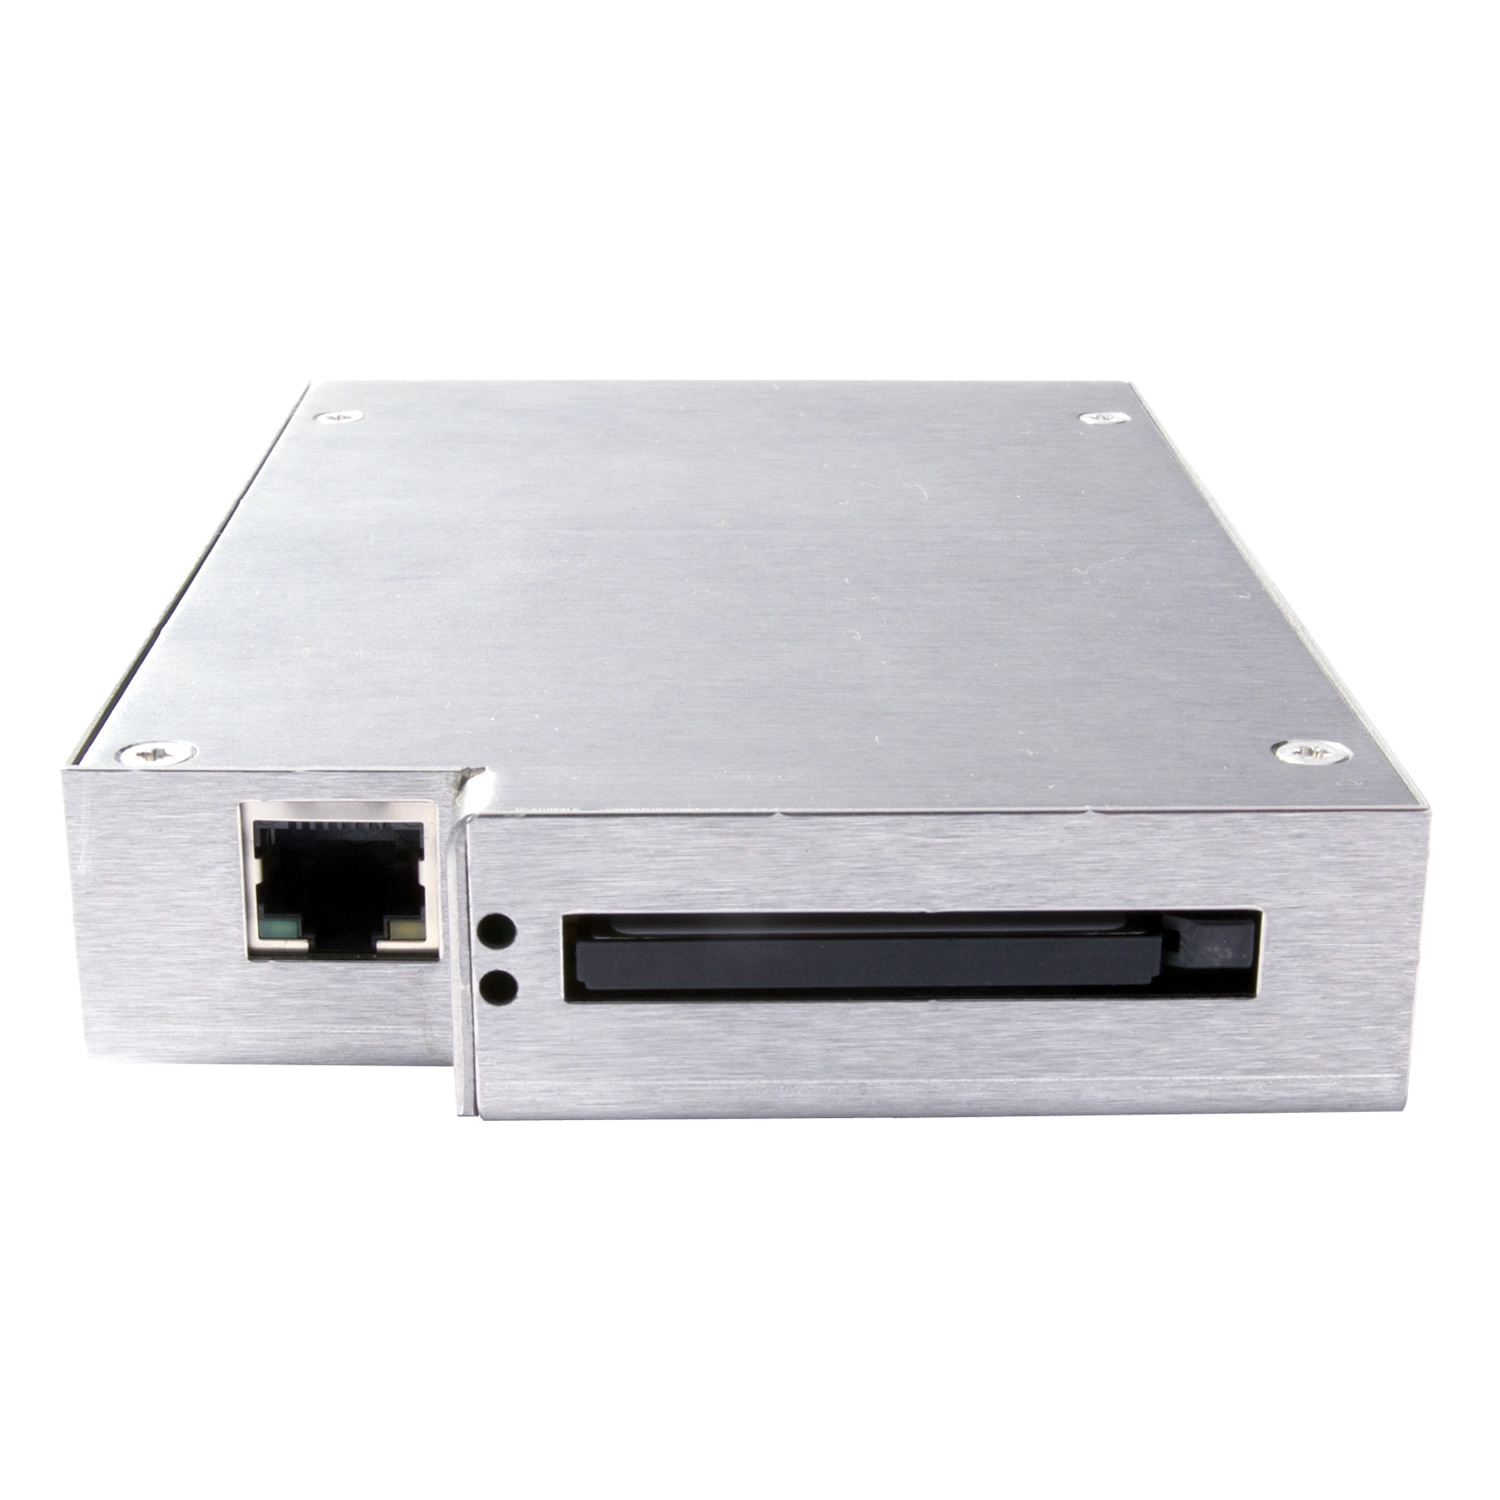 NEW 45E0669 04N2567 IBM SLR100 50-100GB  68 PIN SCSI TAPE DRIVE 